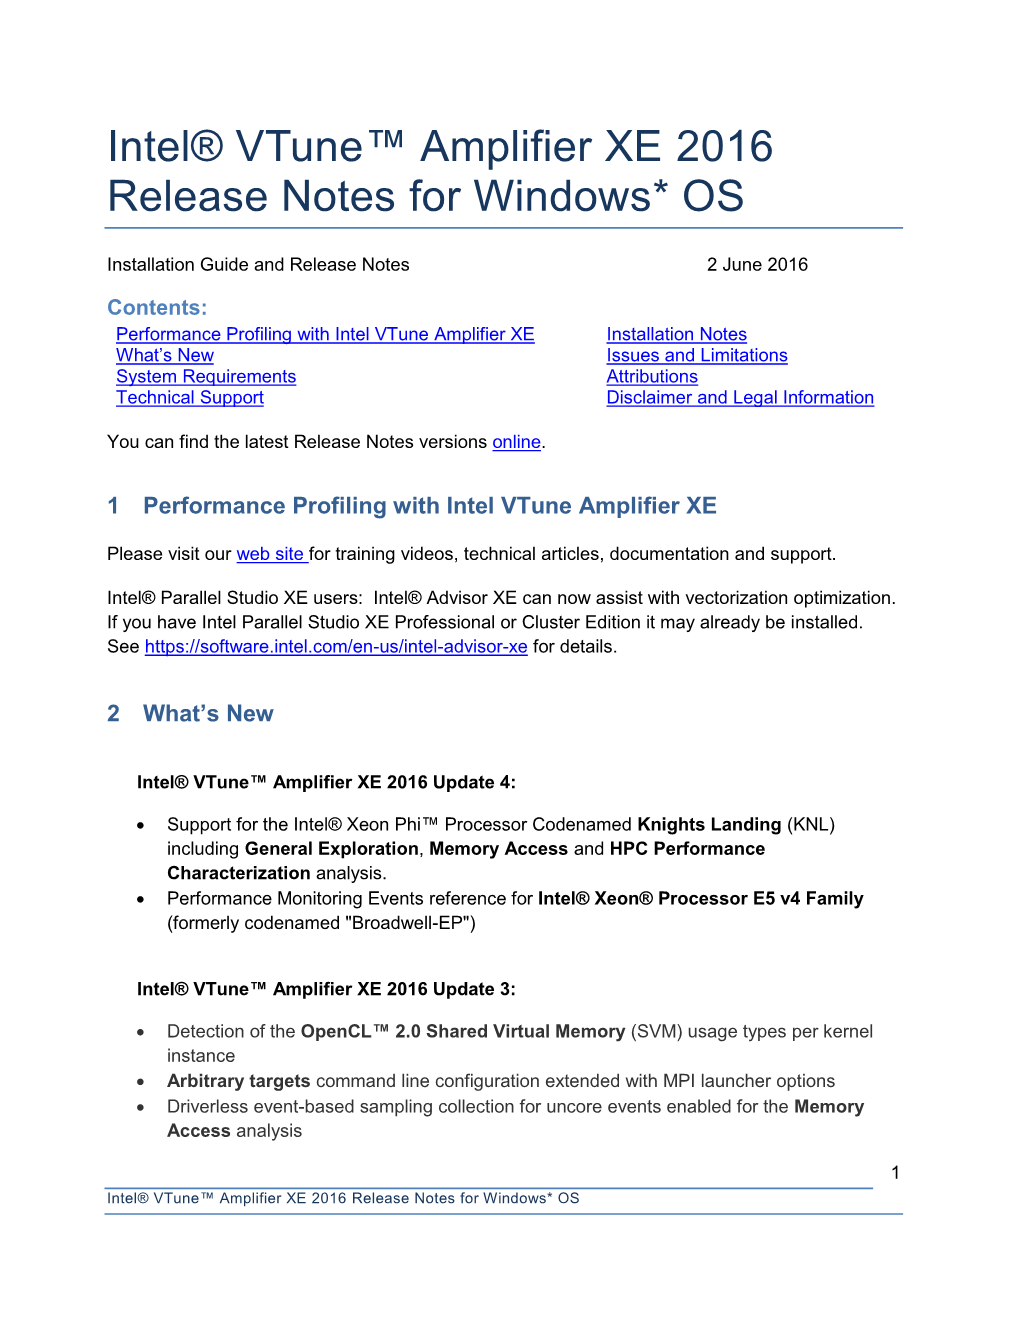 Intel® Vtune™ Amplifier XE 2016 Release Notes for Windows* OS